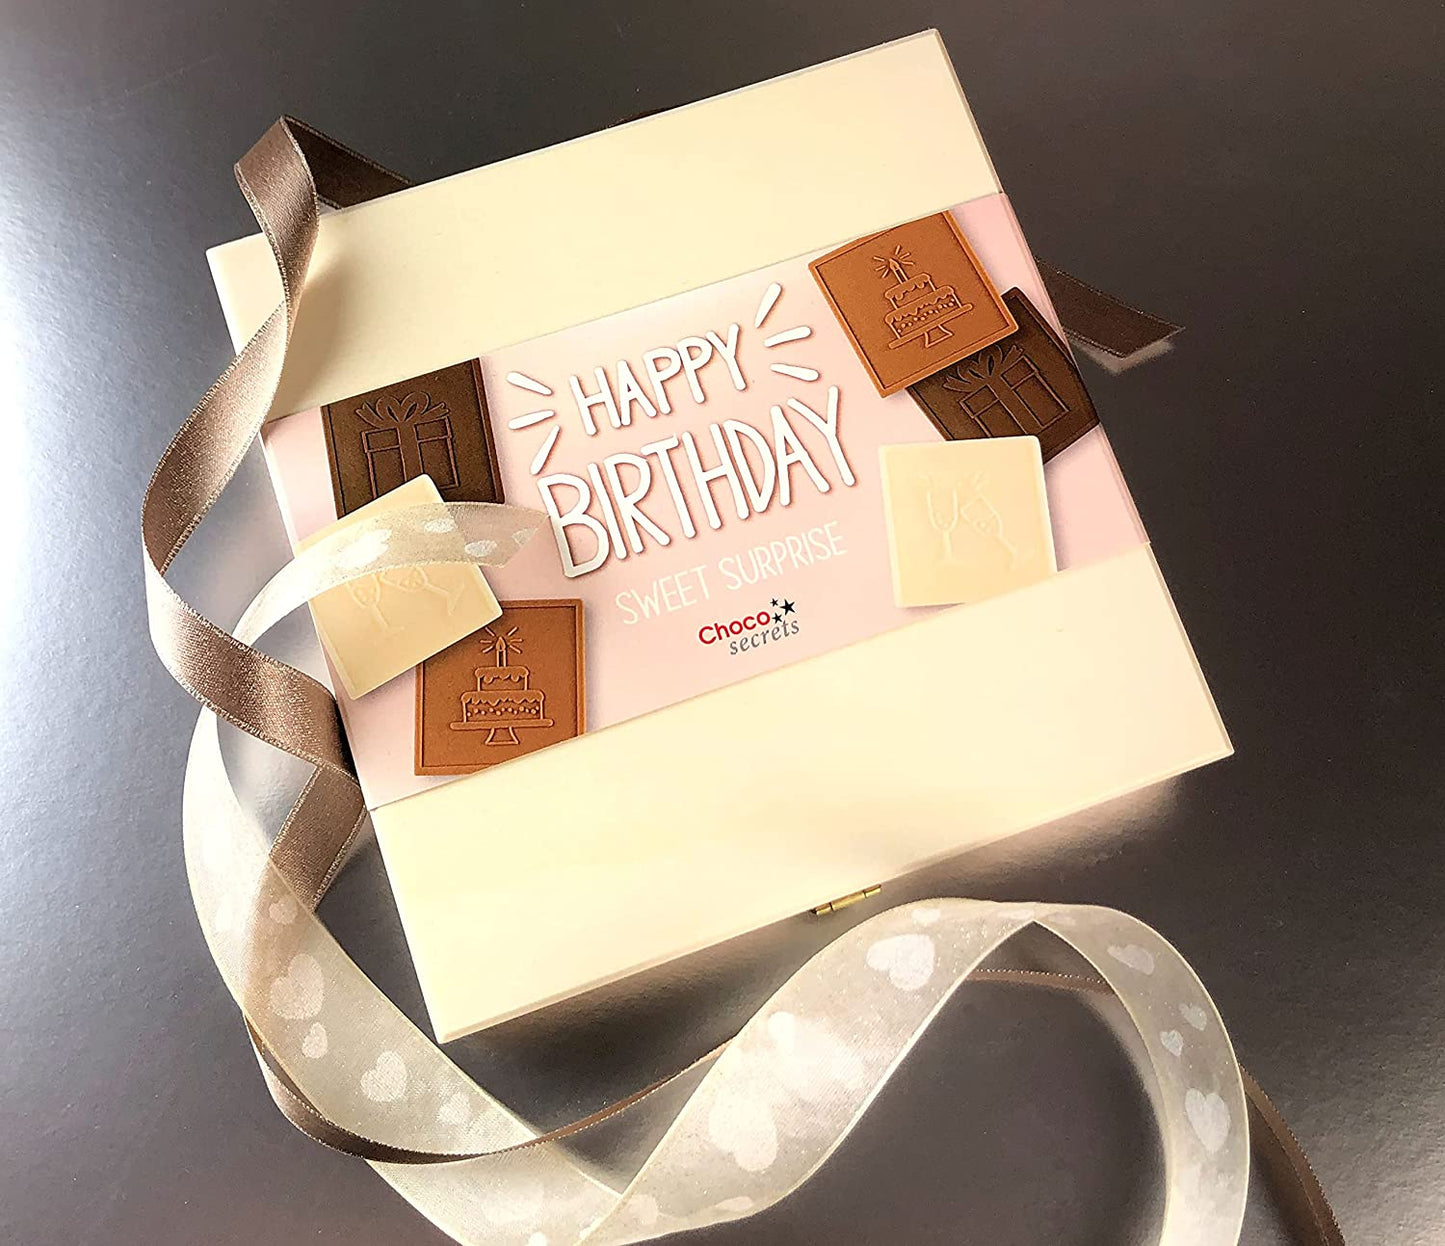 Caja de Cumpleaños de Chocolate "Happy Birthday - Sweet Surprise"